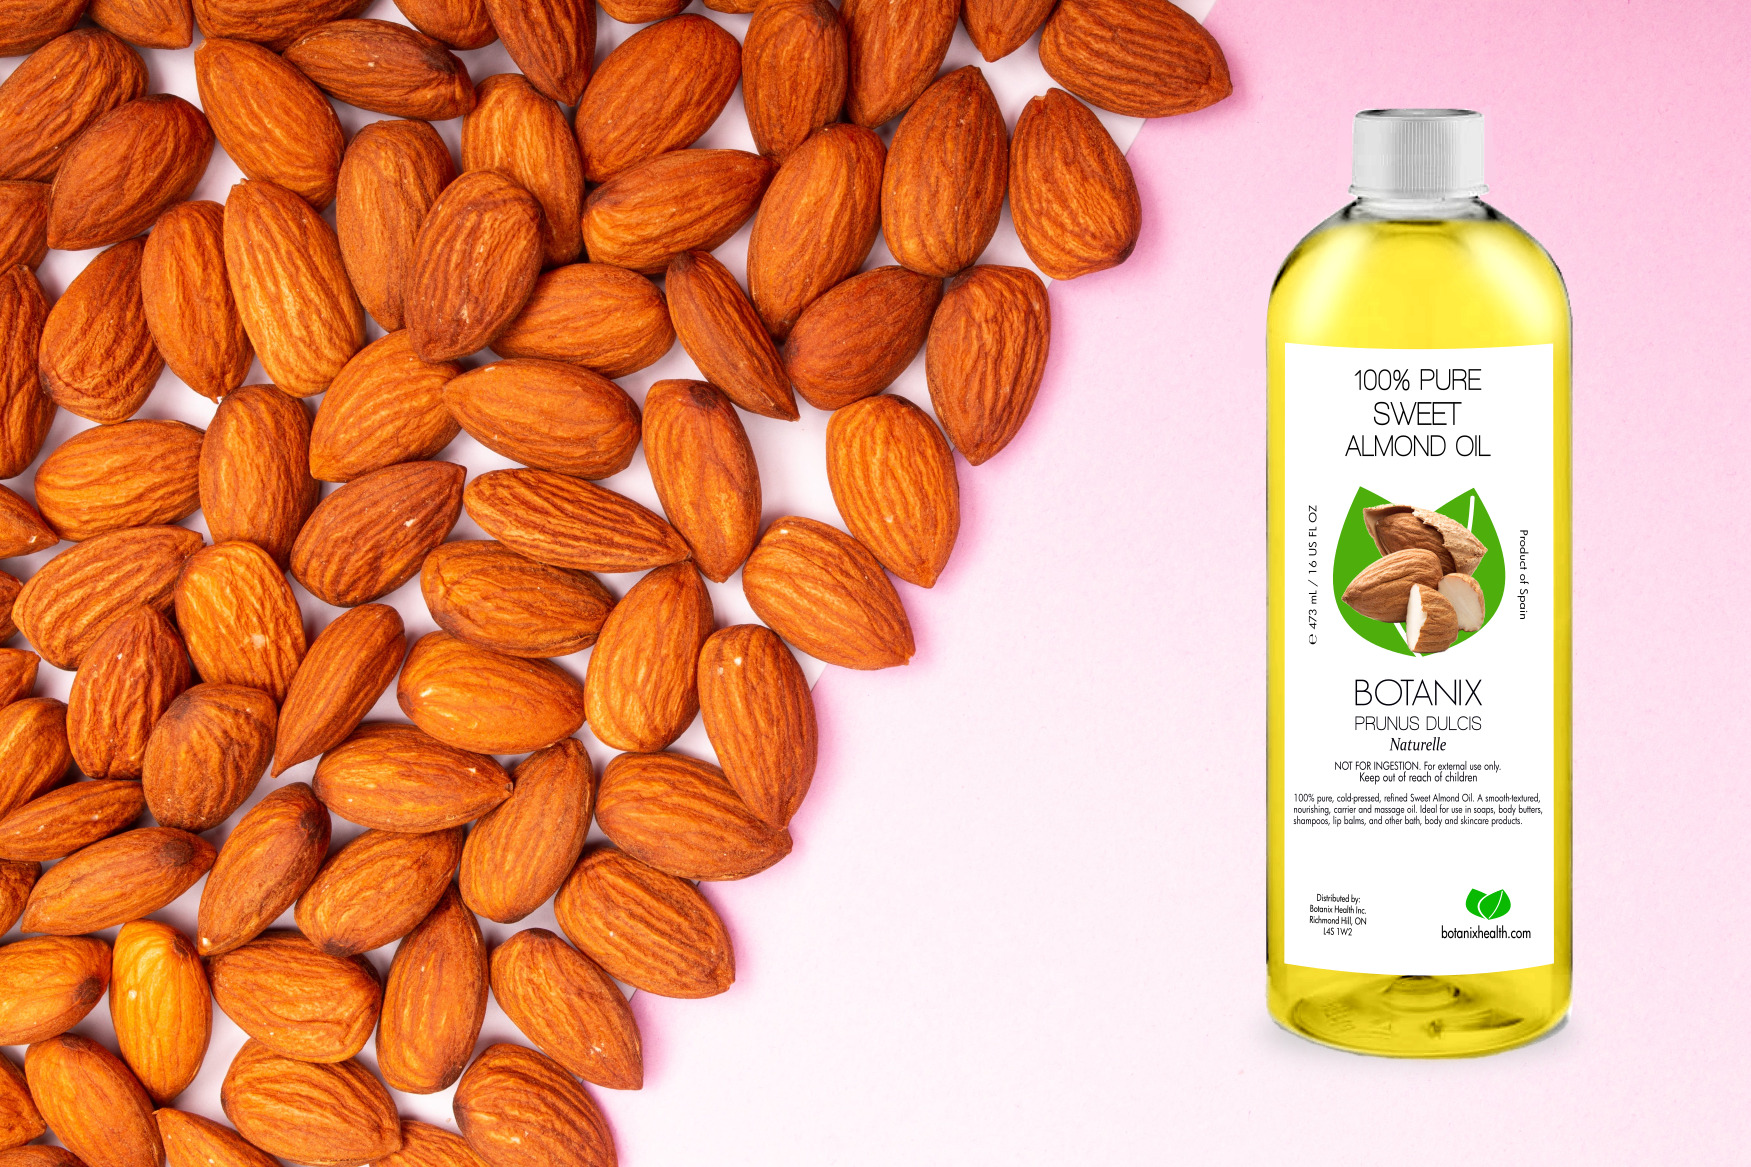 fresh almonds with botanix moisturizing almond oil bottle